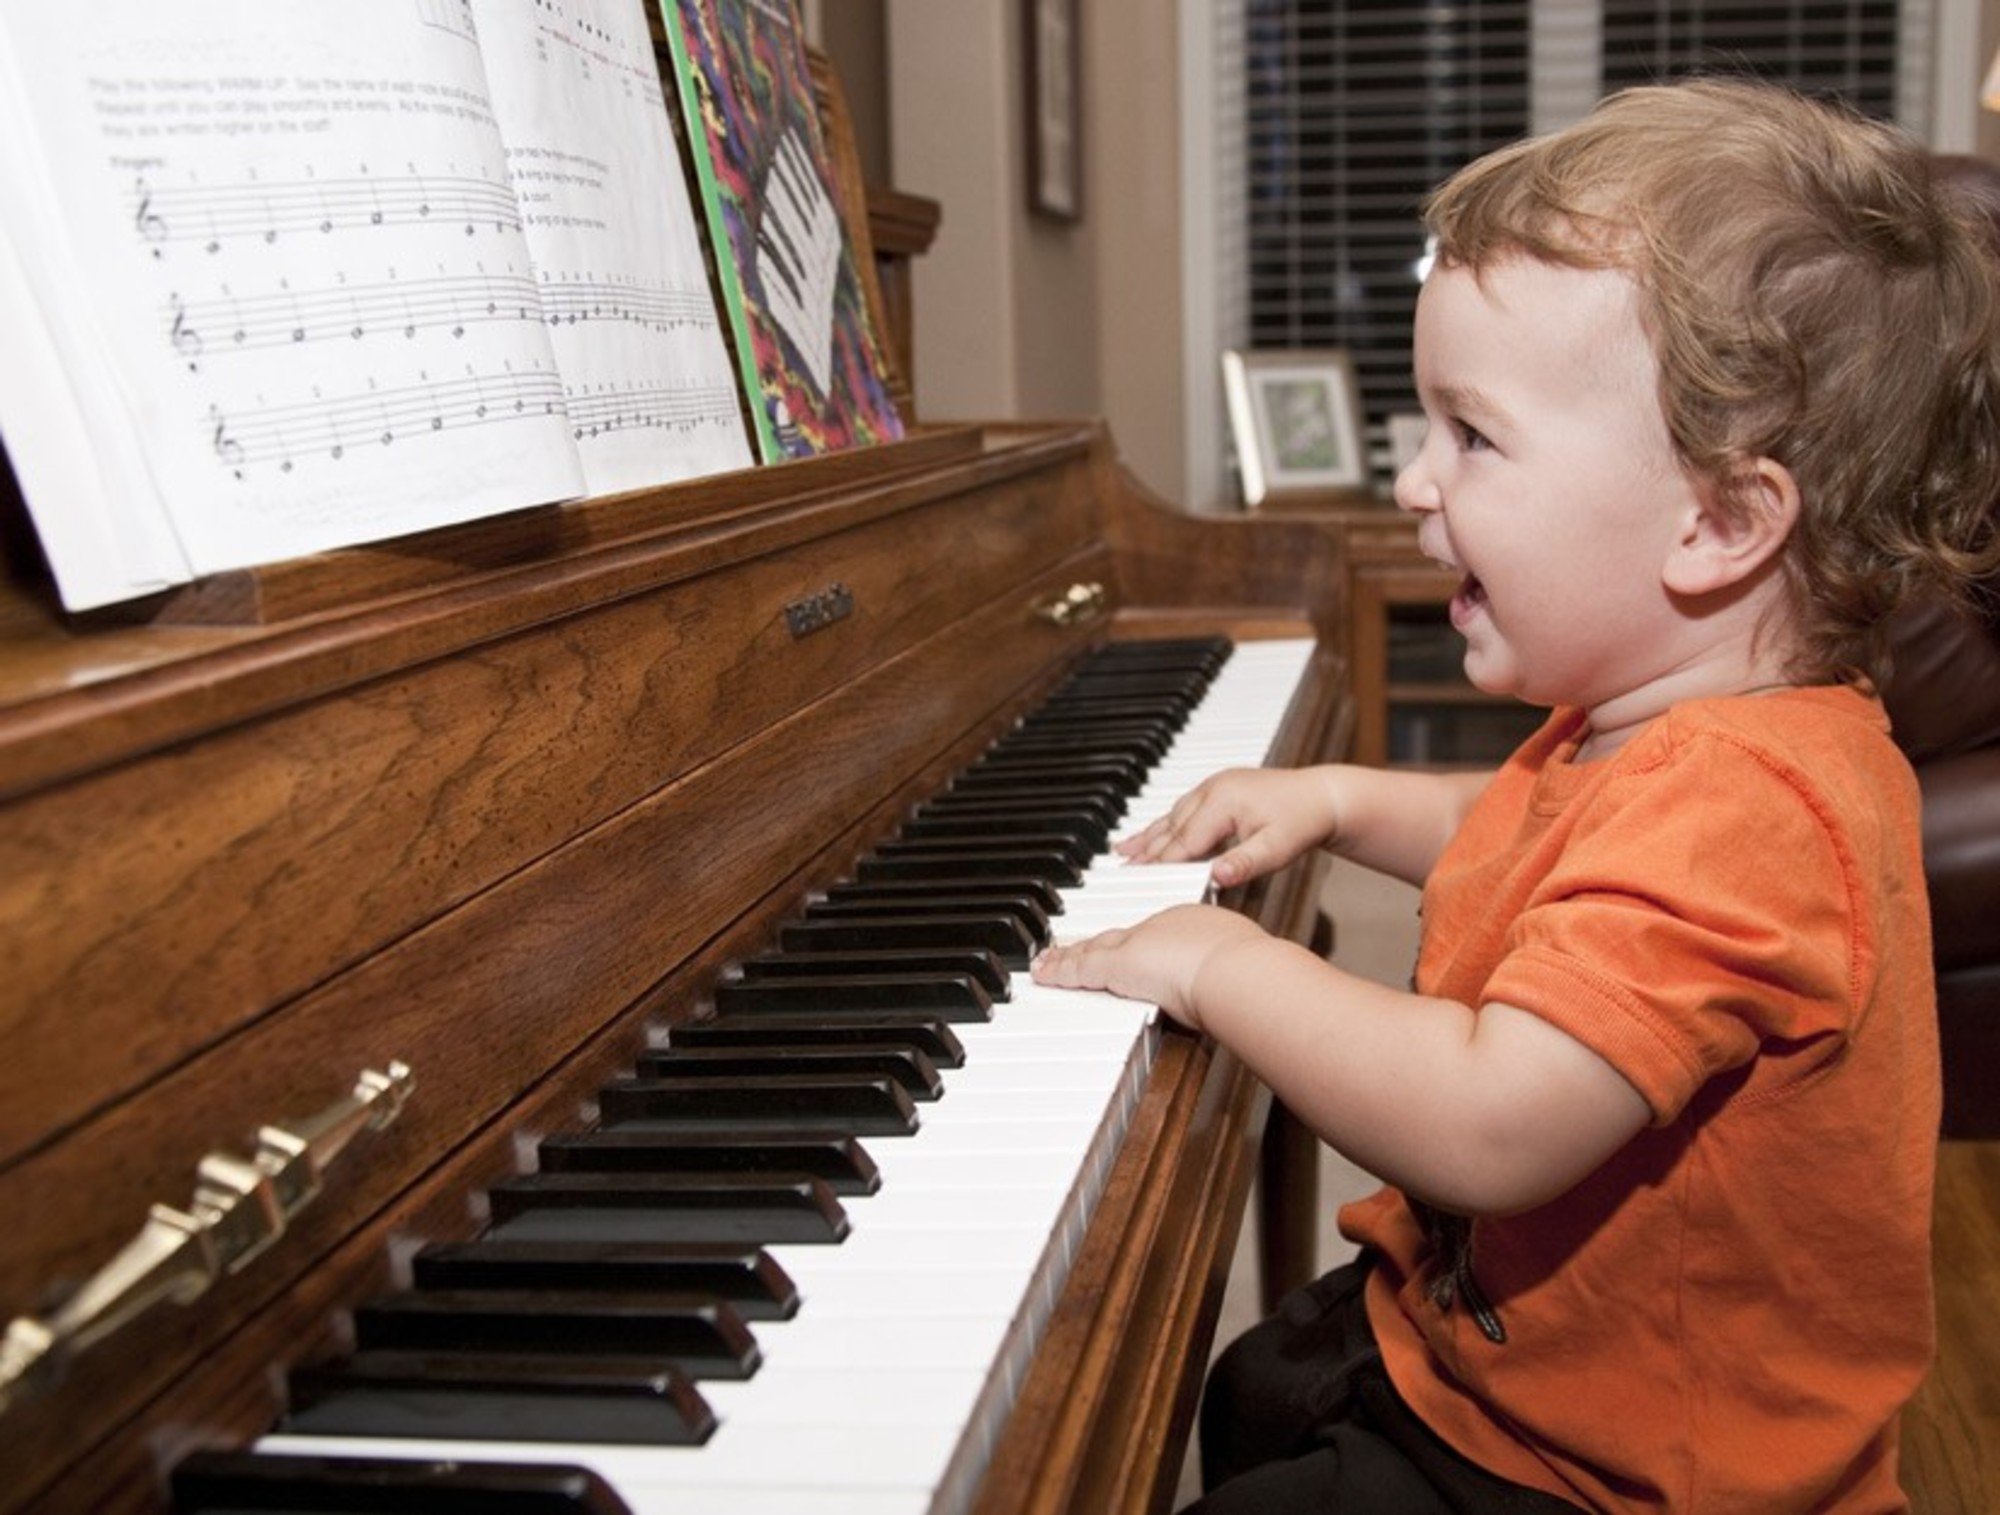 Sister play piano. Фортепиано для детей. Пианино для детей. Музыкальные инструменты для детей. Пианино в детском саду.